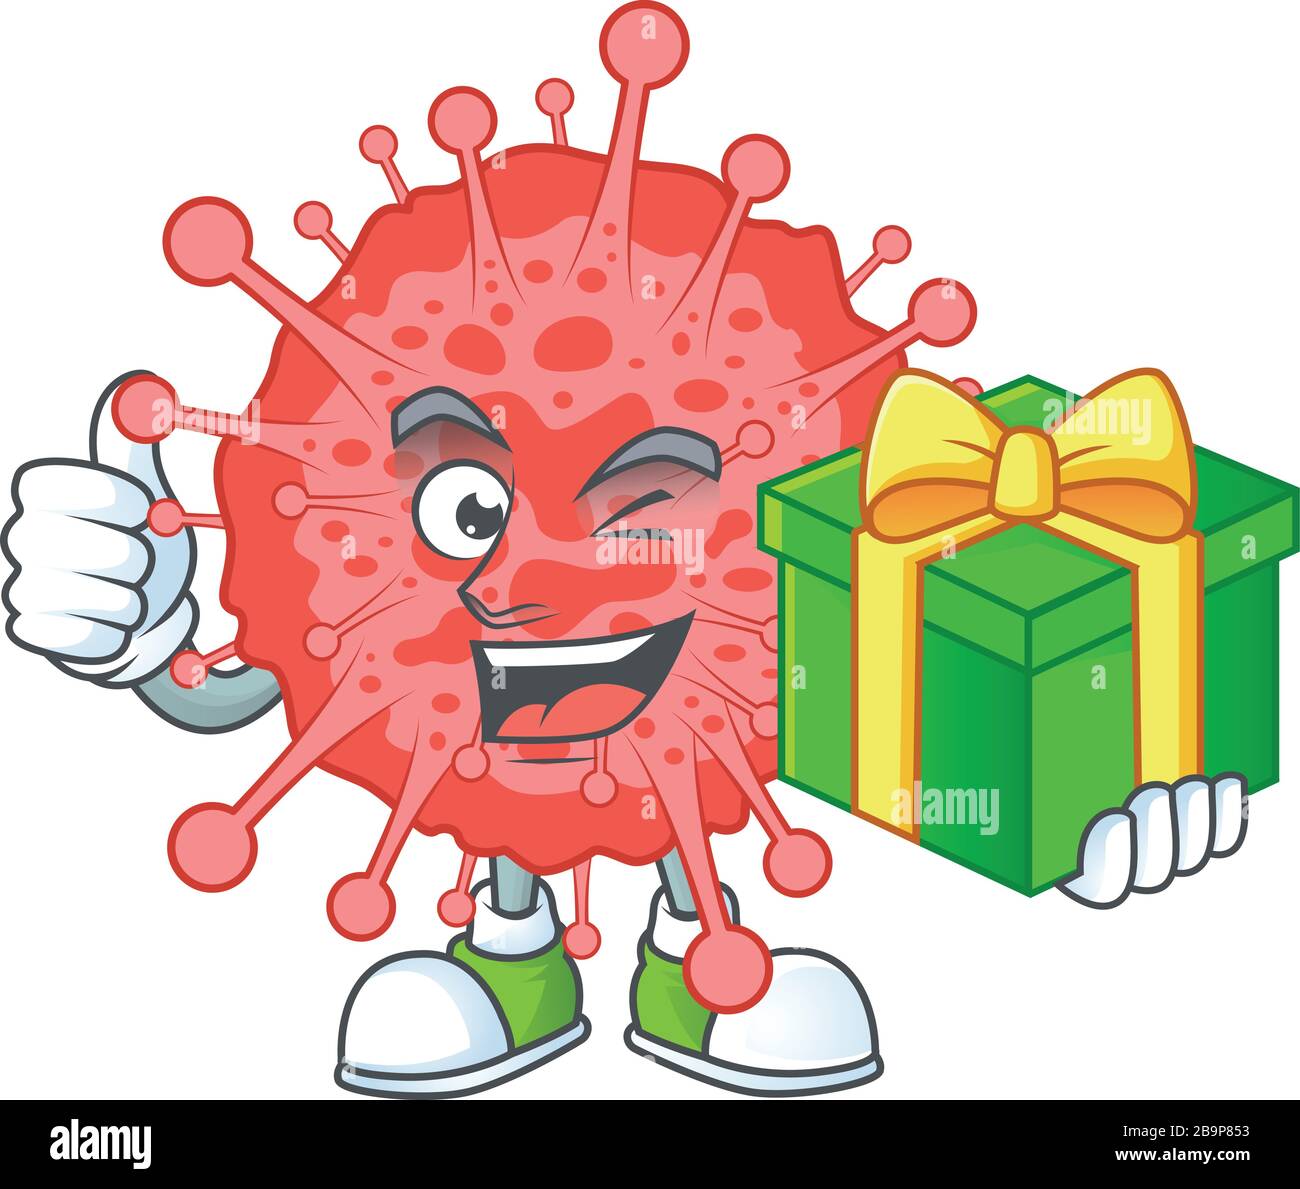 Cheerful coronavirus disaster cartoon character holding a gift box Stock Vector